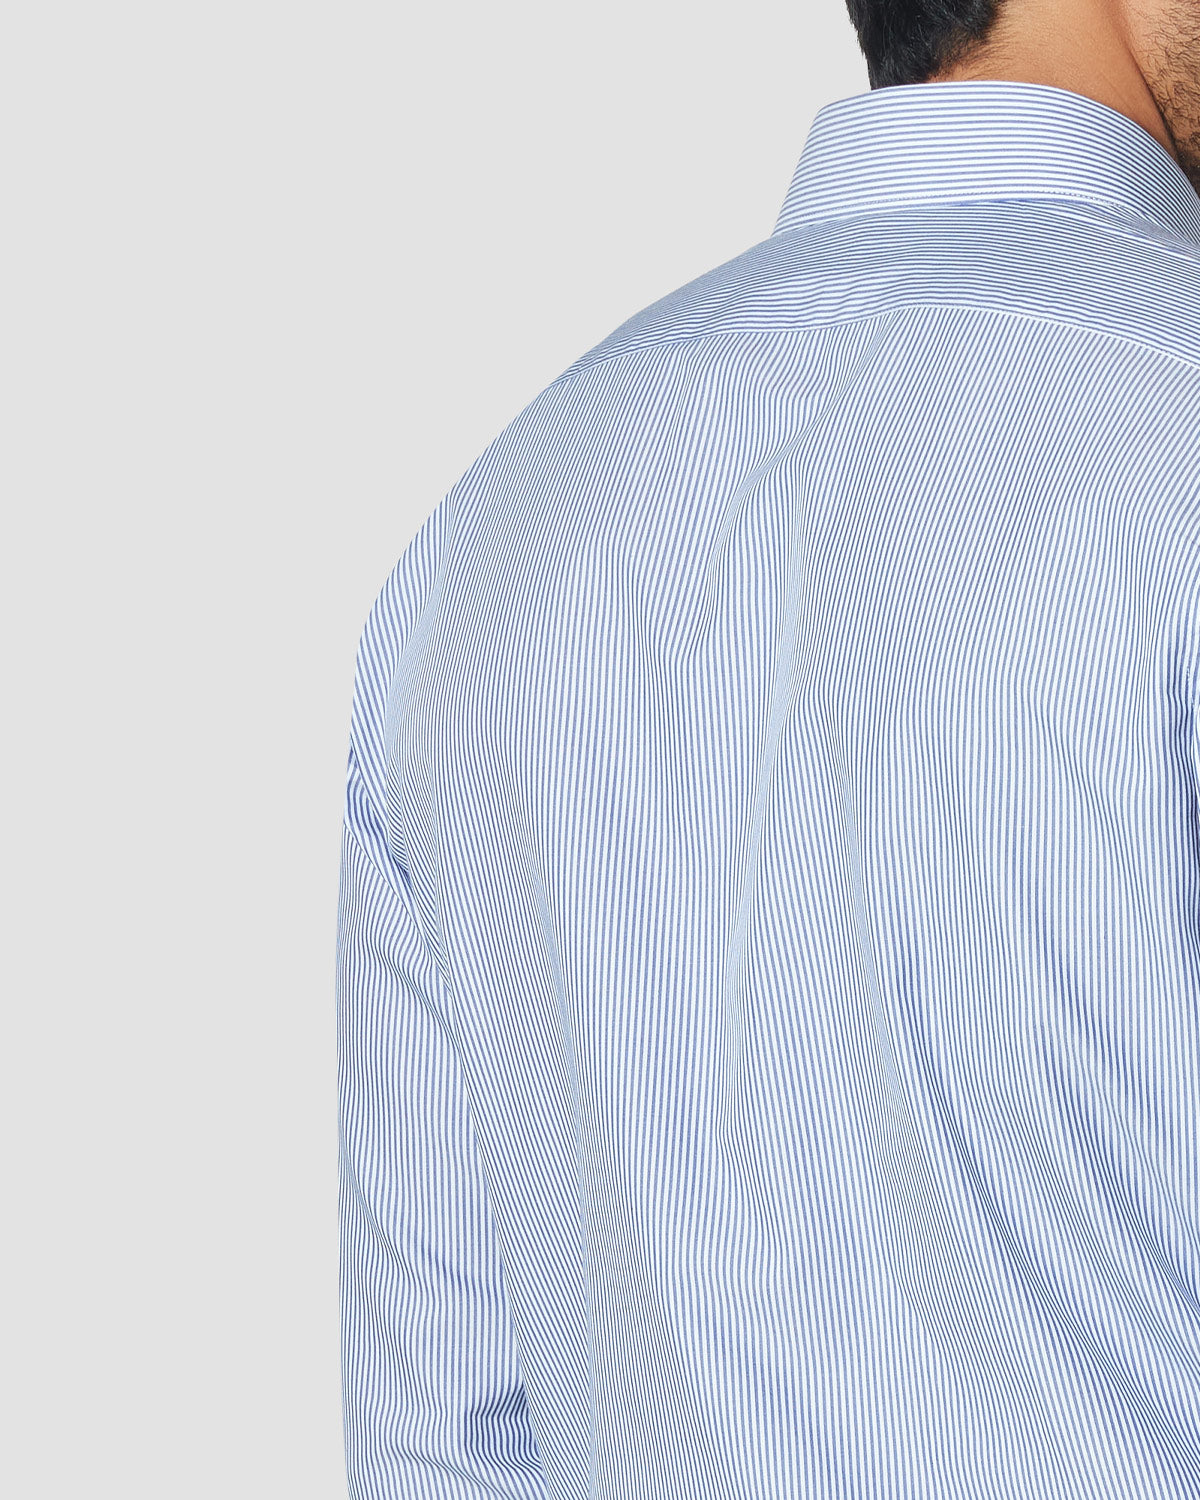 Bombay Shirt Company - Sea Ridge Striped Shirt